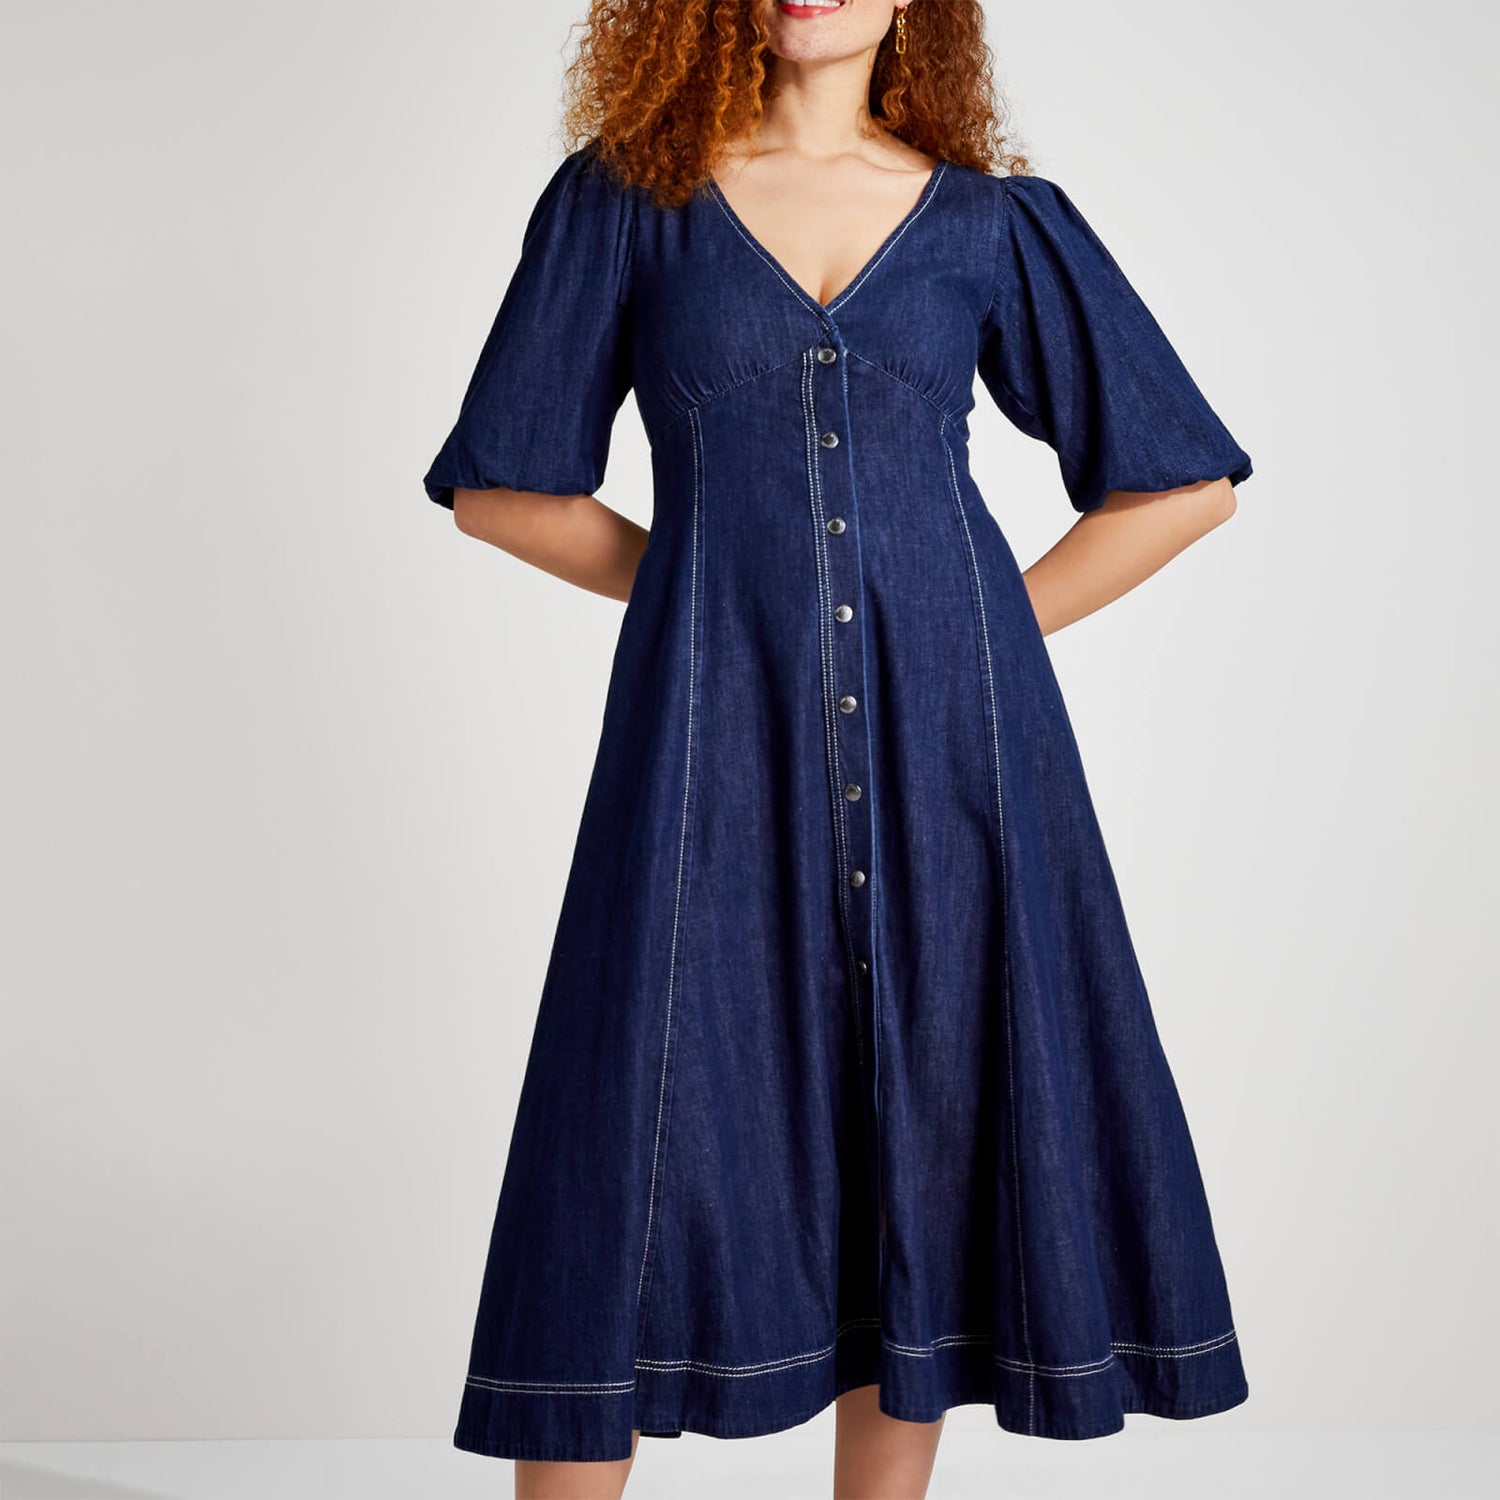 Kate Spade New York Women's Denim Button-Front Dress - Denim - UK 6